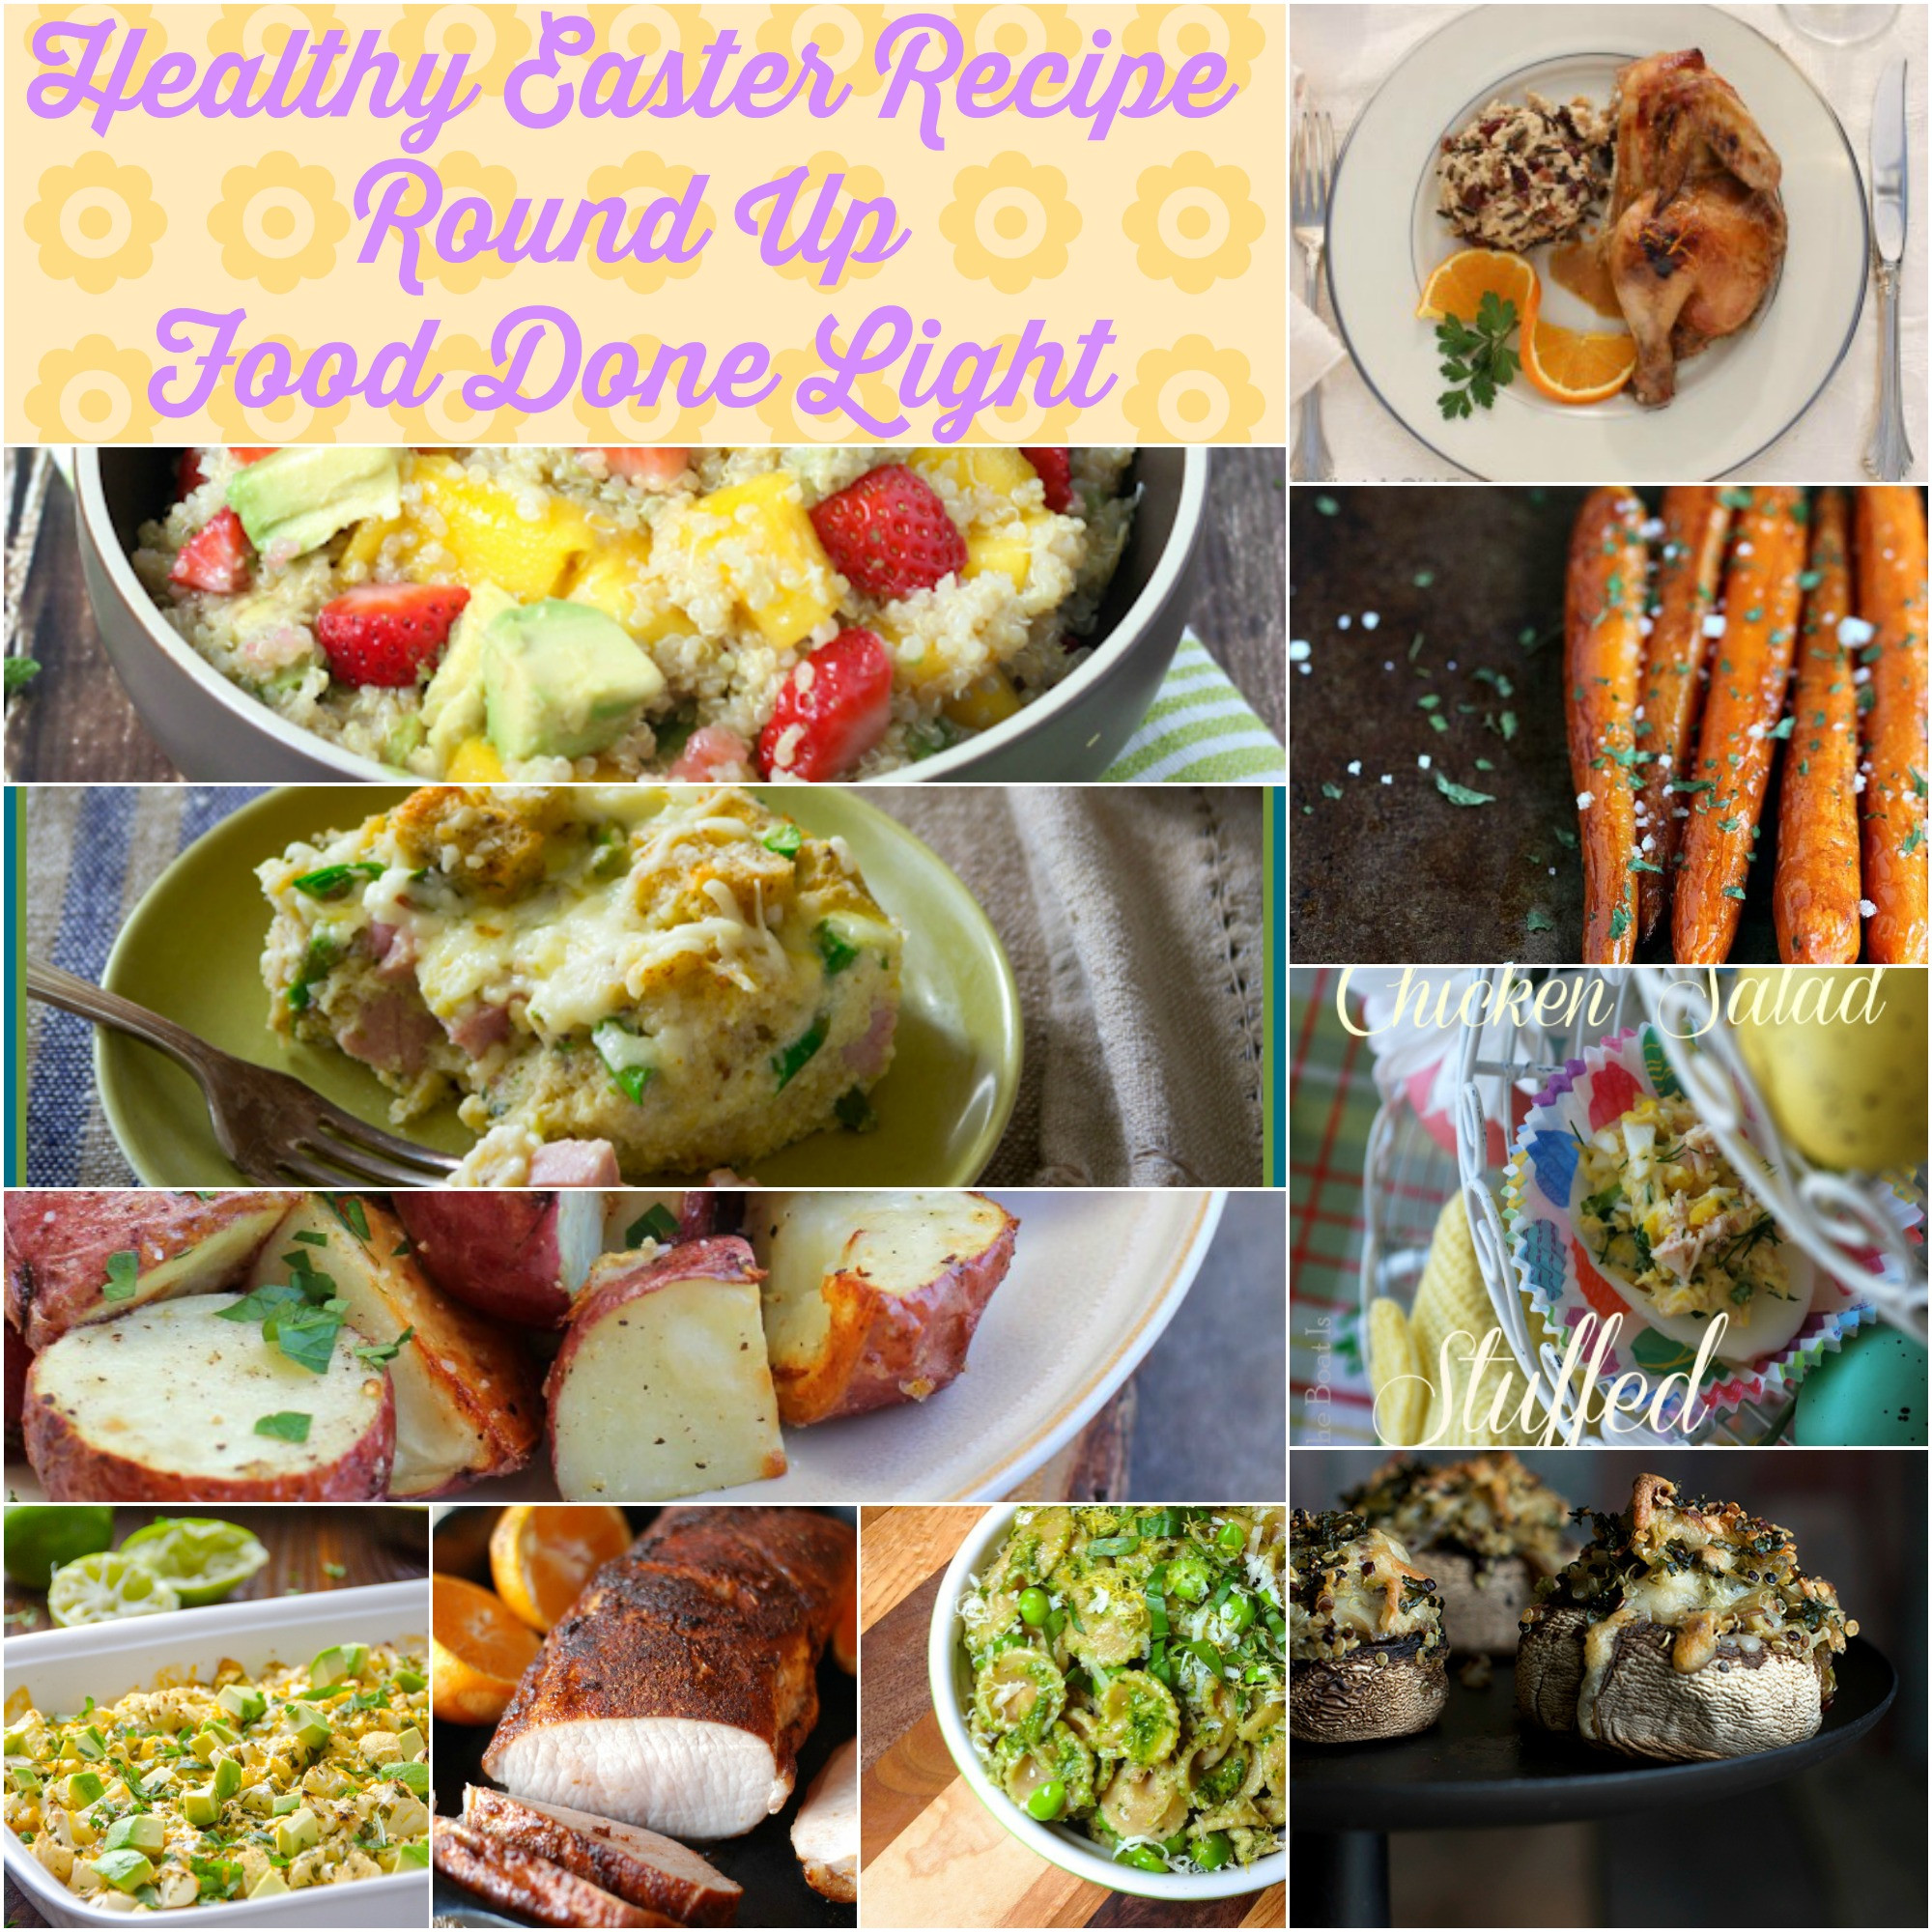 Healthy Easter Dinner Menu
 Healthy Easter Brunch Recipe Round Up Food Done Light